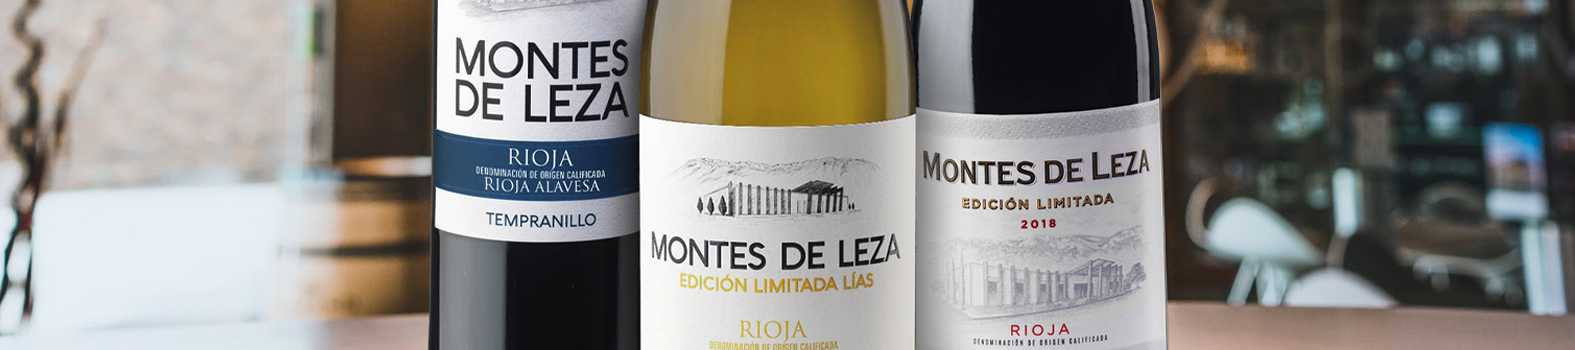 Enoturismo - Catas comentadas - Cata Montes de Leza - 3 vinos - Bodegas Lozano